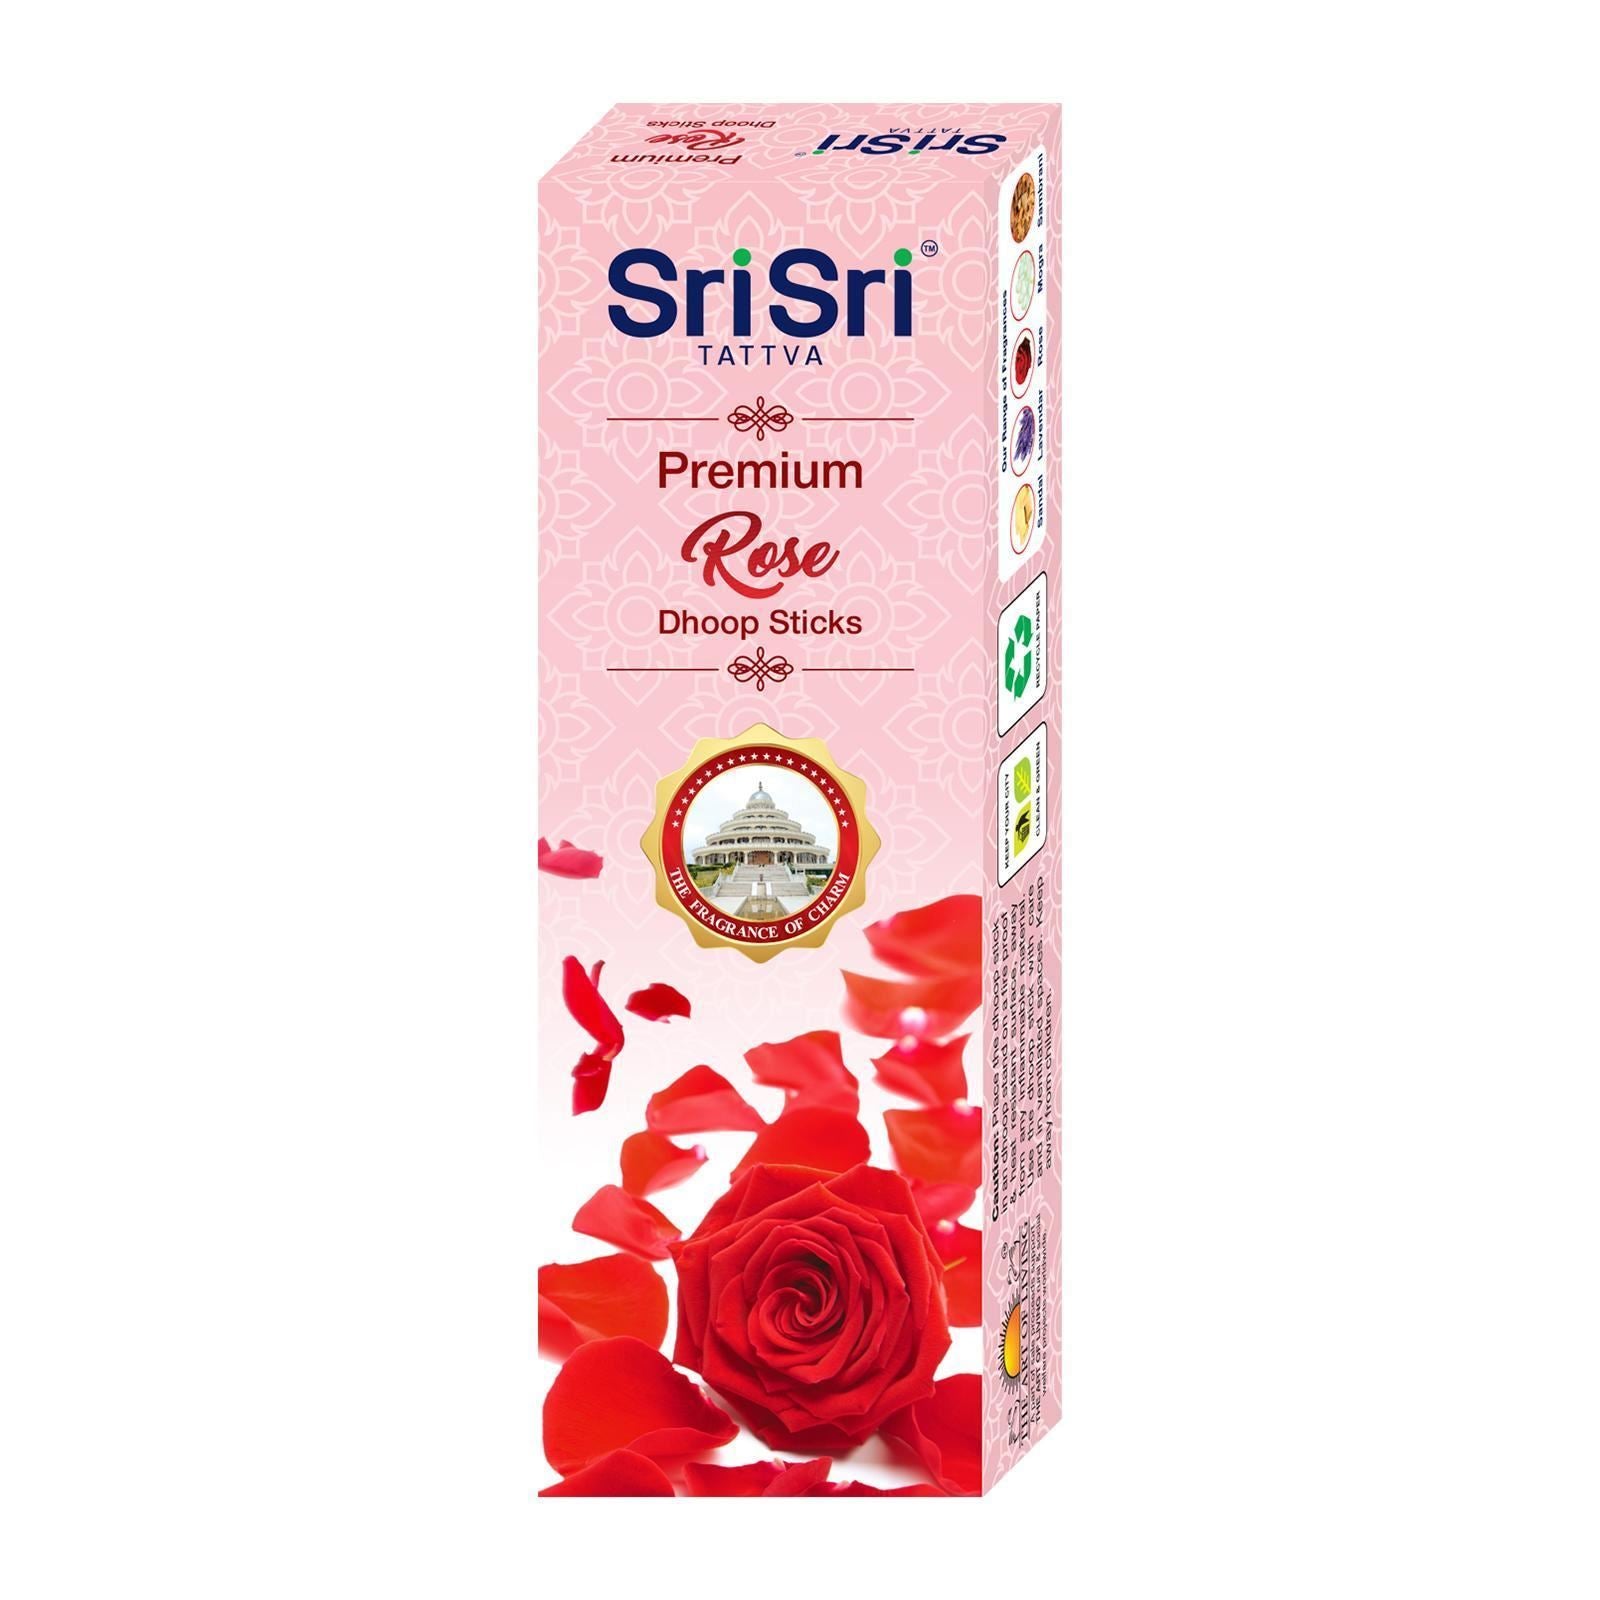 Sri Sri Tattva Premium Rose Dhoop Sticks